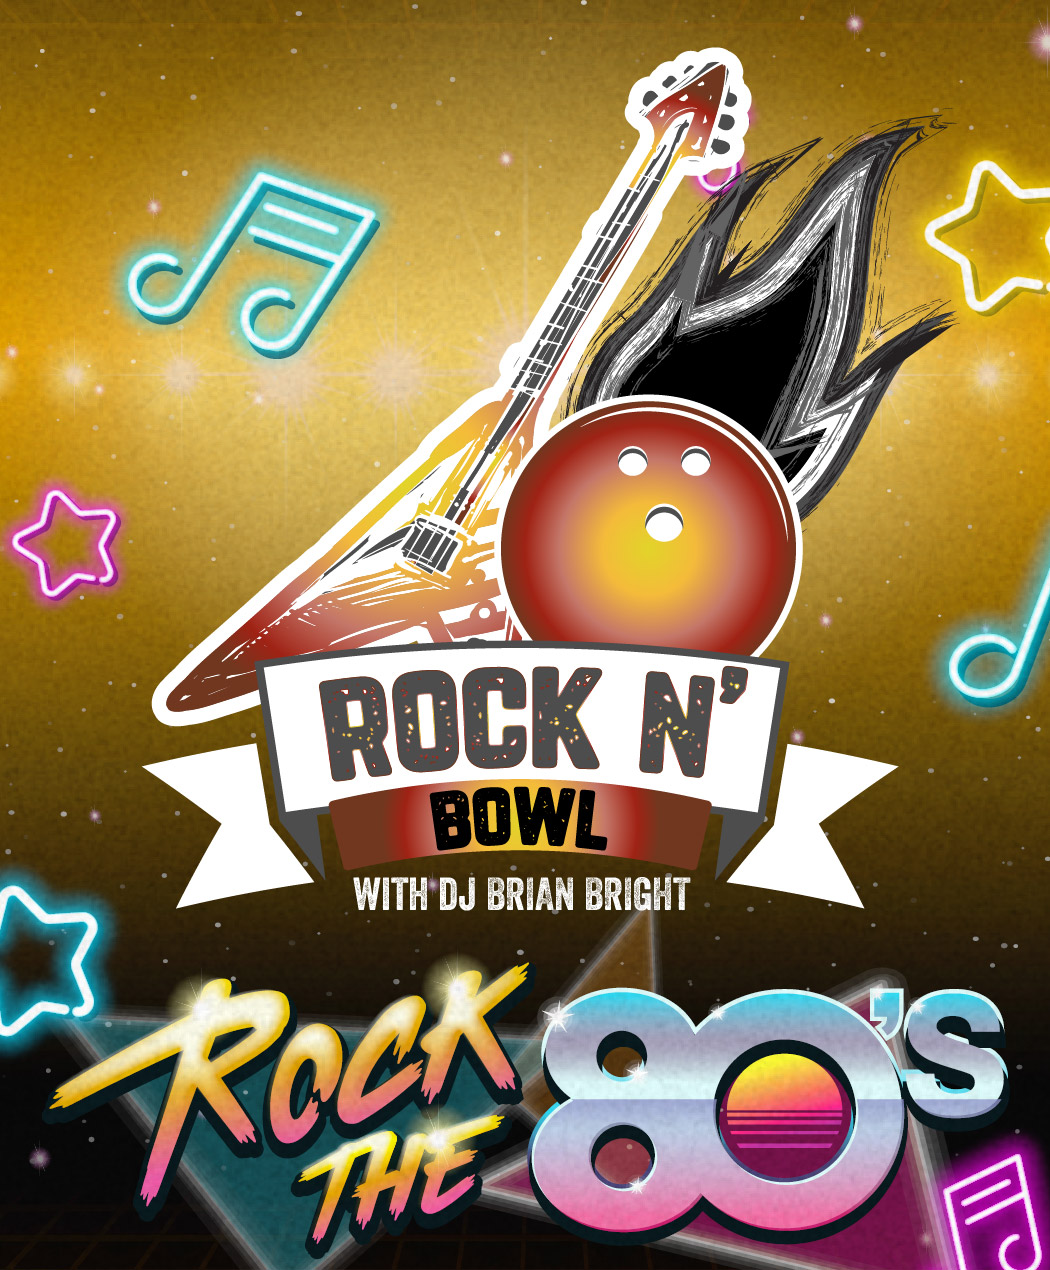 Rock N Bowl Rock the 80s